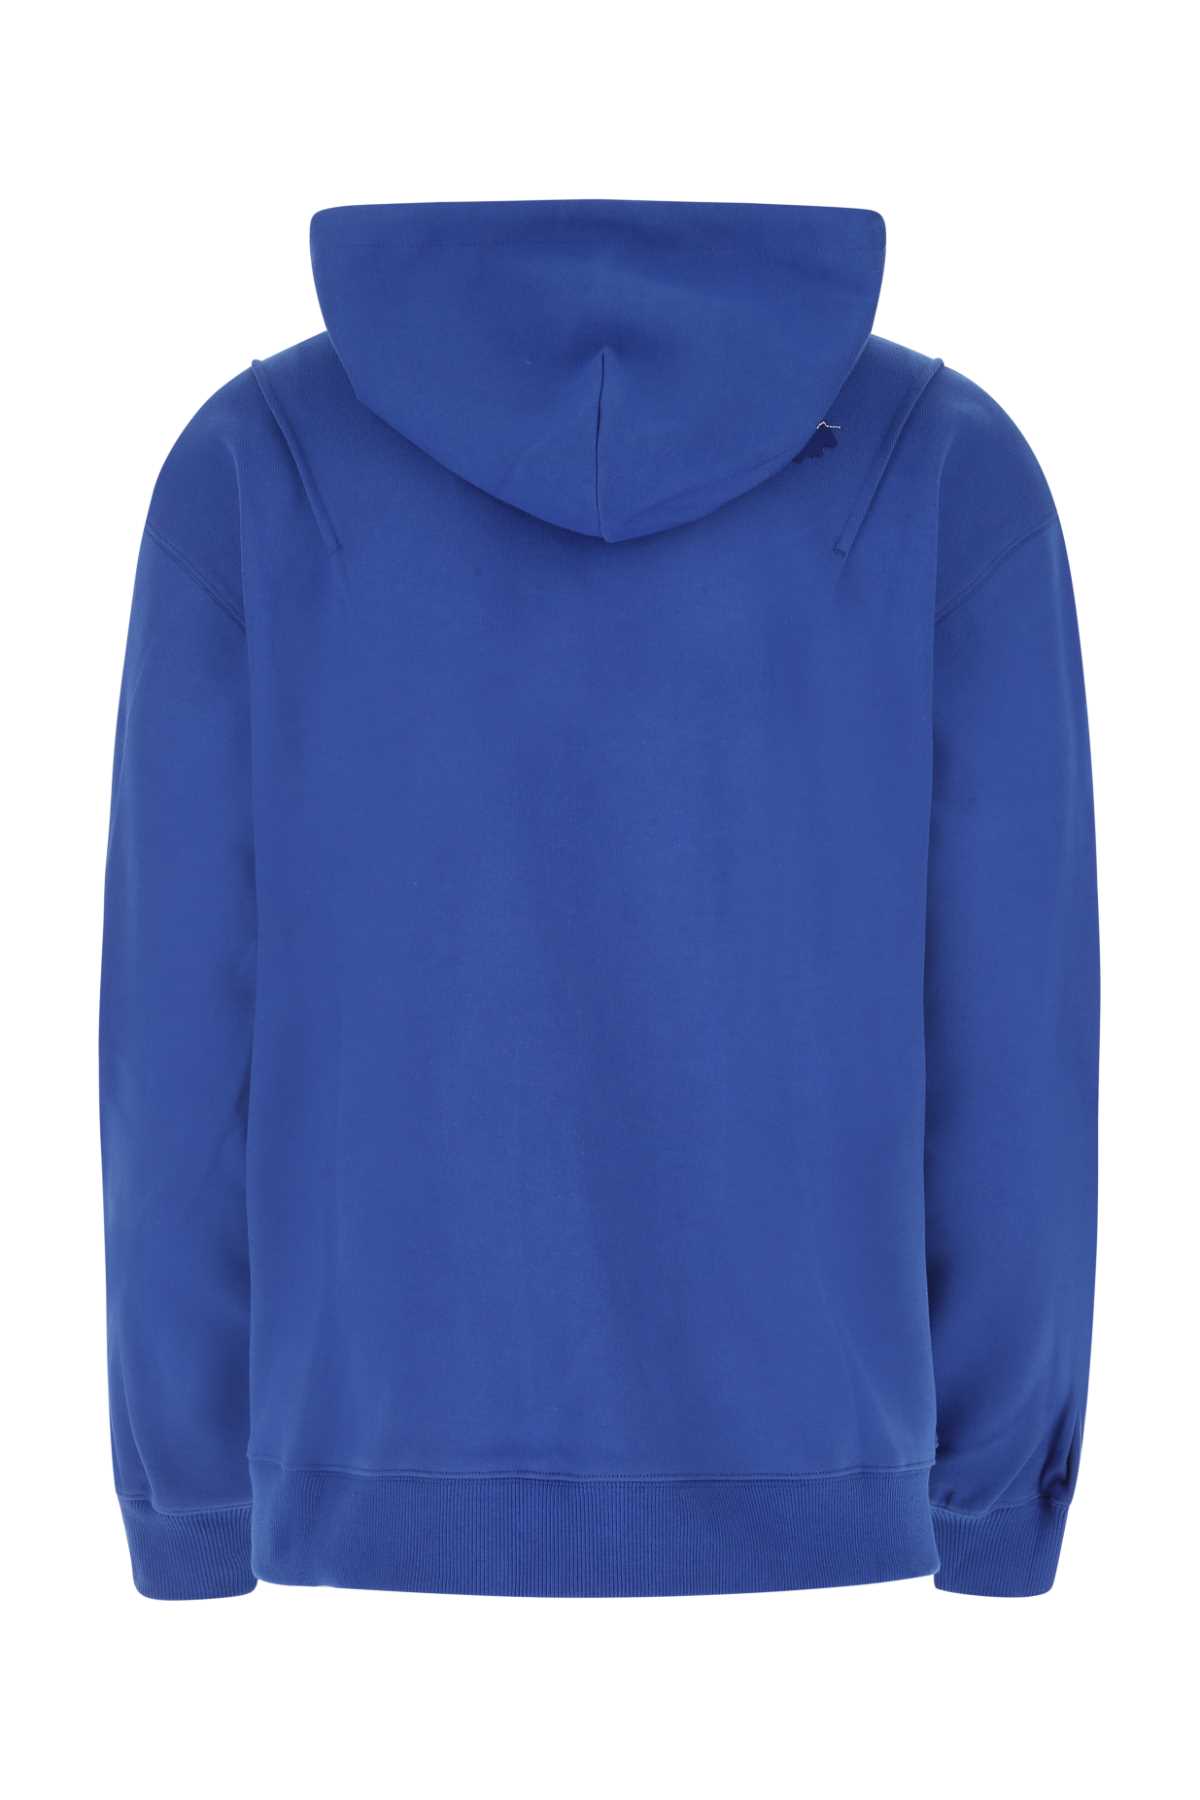 Shop Ader Error Electric Blue Cotton Blend Oversize Sweatshirt